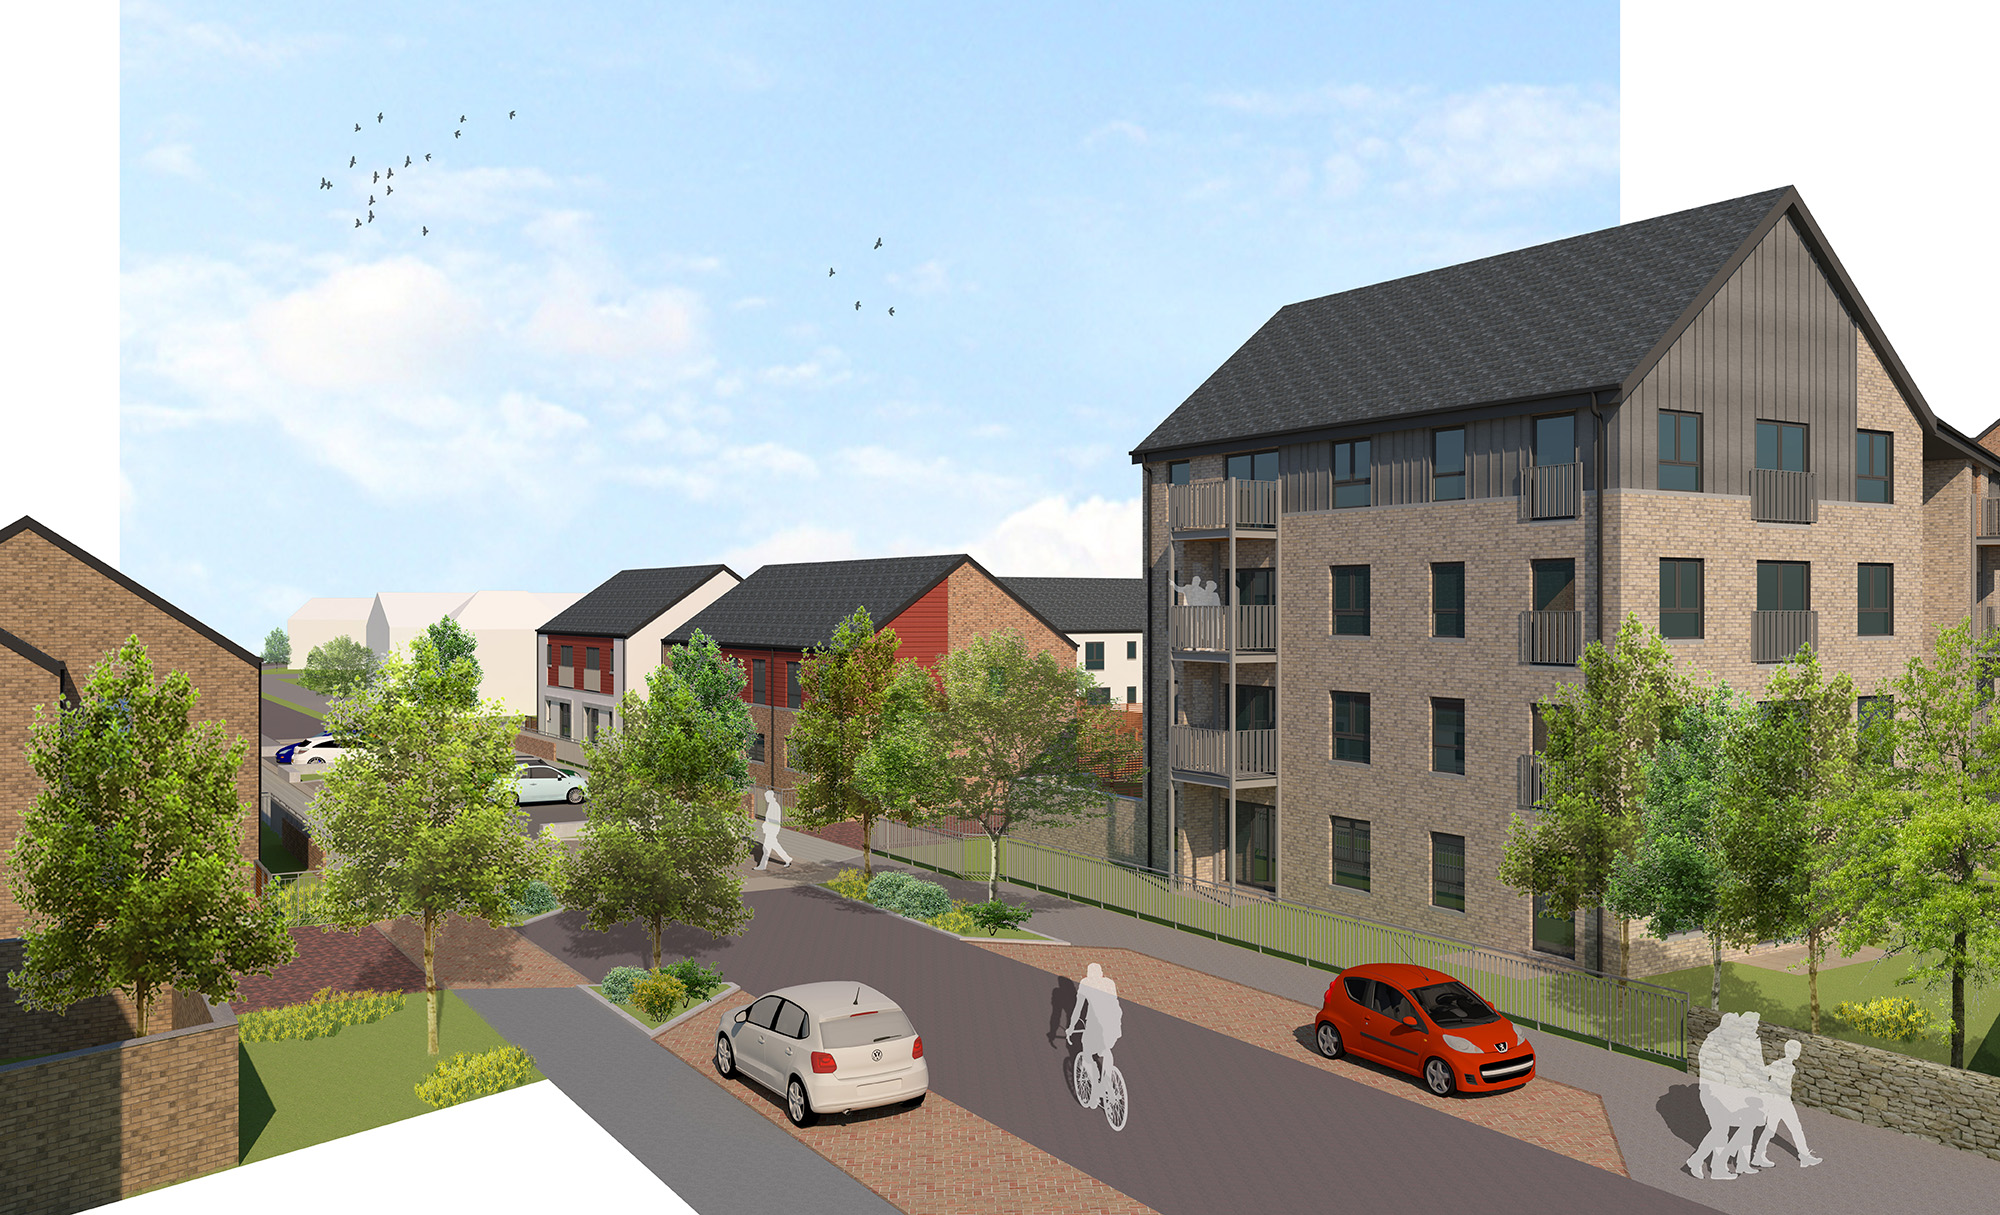 Dunedin Canmore to start work on 300 new homes in Edinburgh